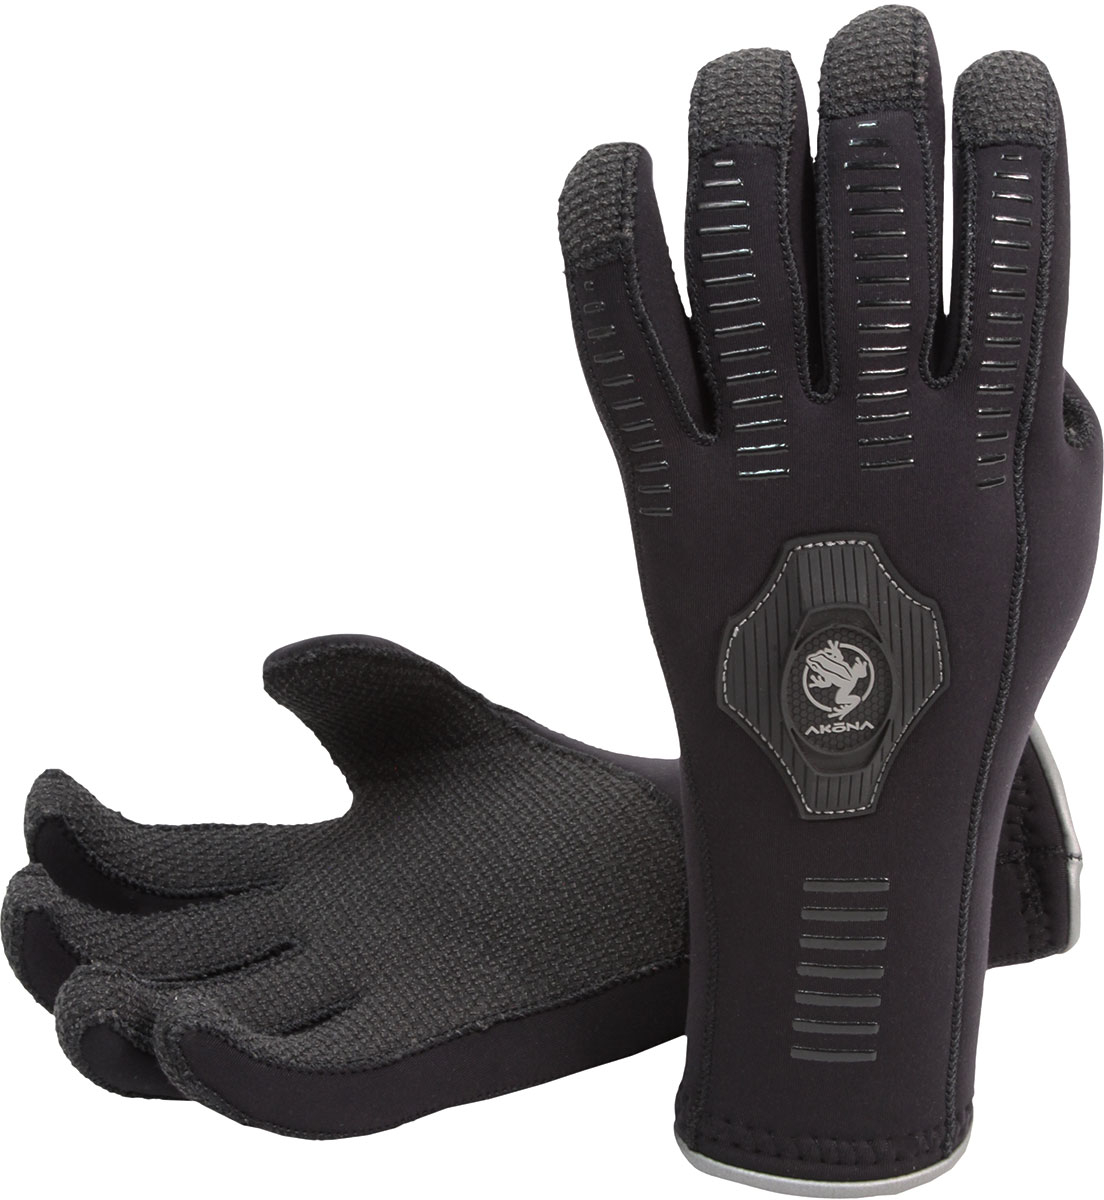 Akona 3.5mm ArmorTex Tip Gloves